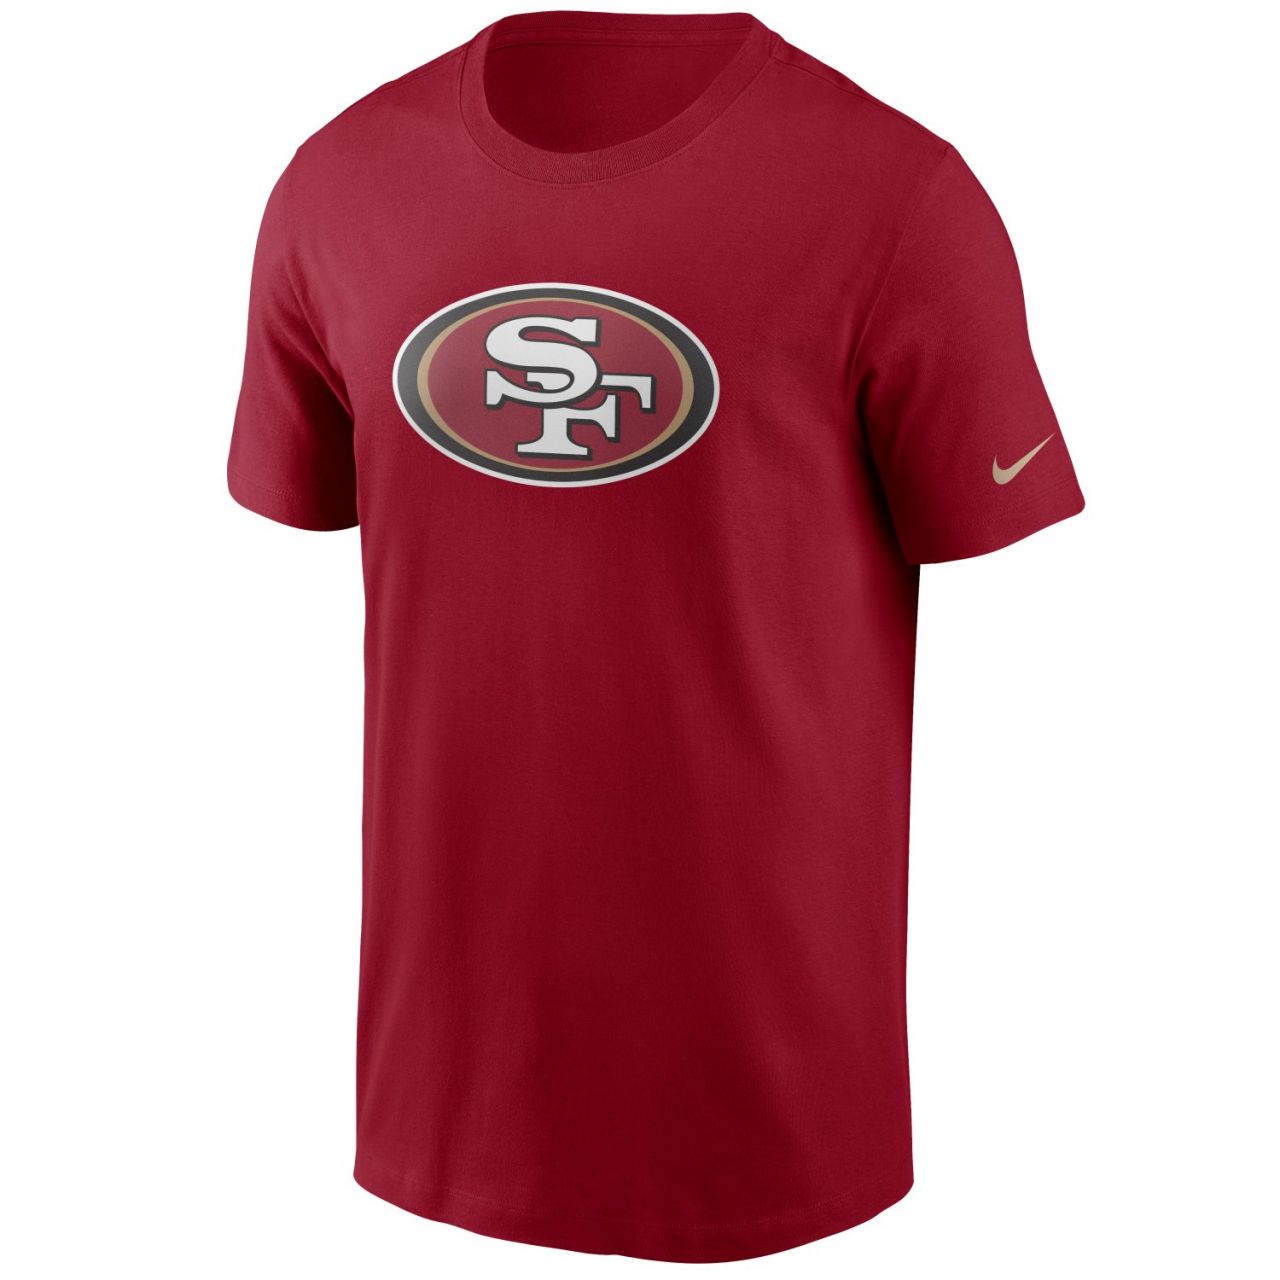 amfoo - Nike NFL Essential Shirt - San Francisco 49ers rot